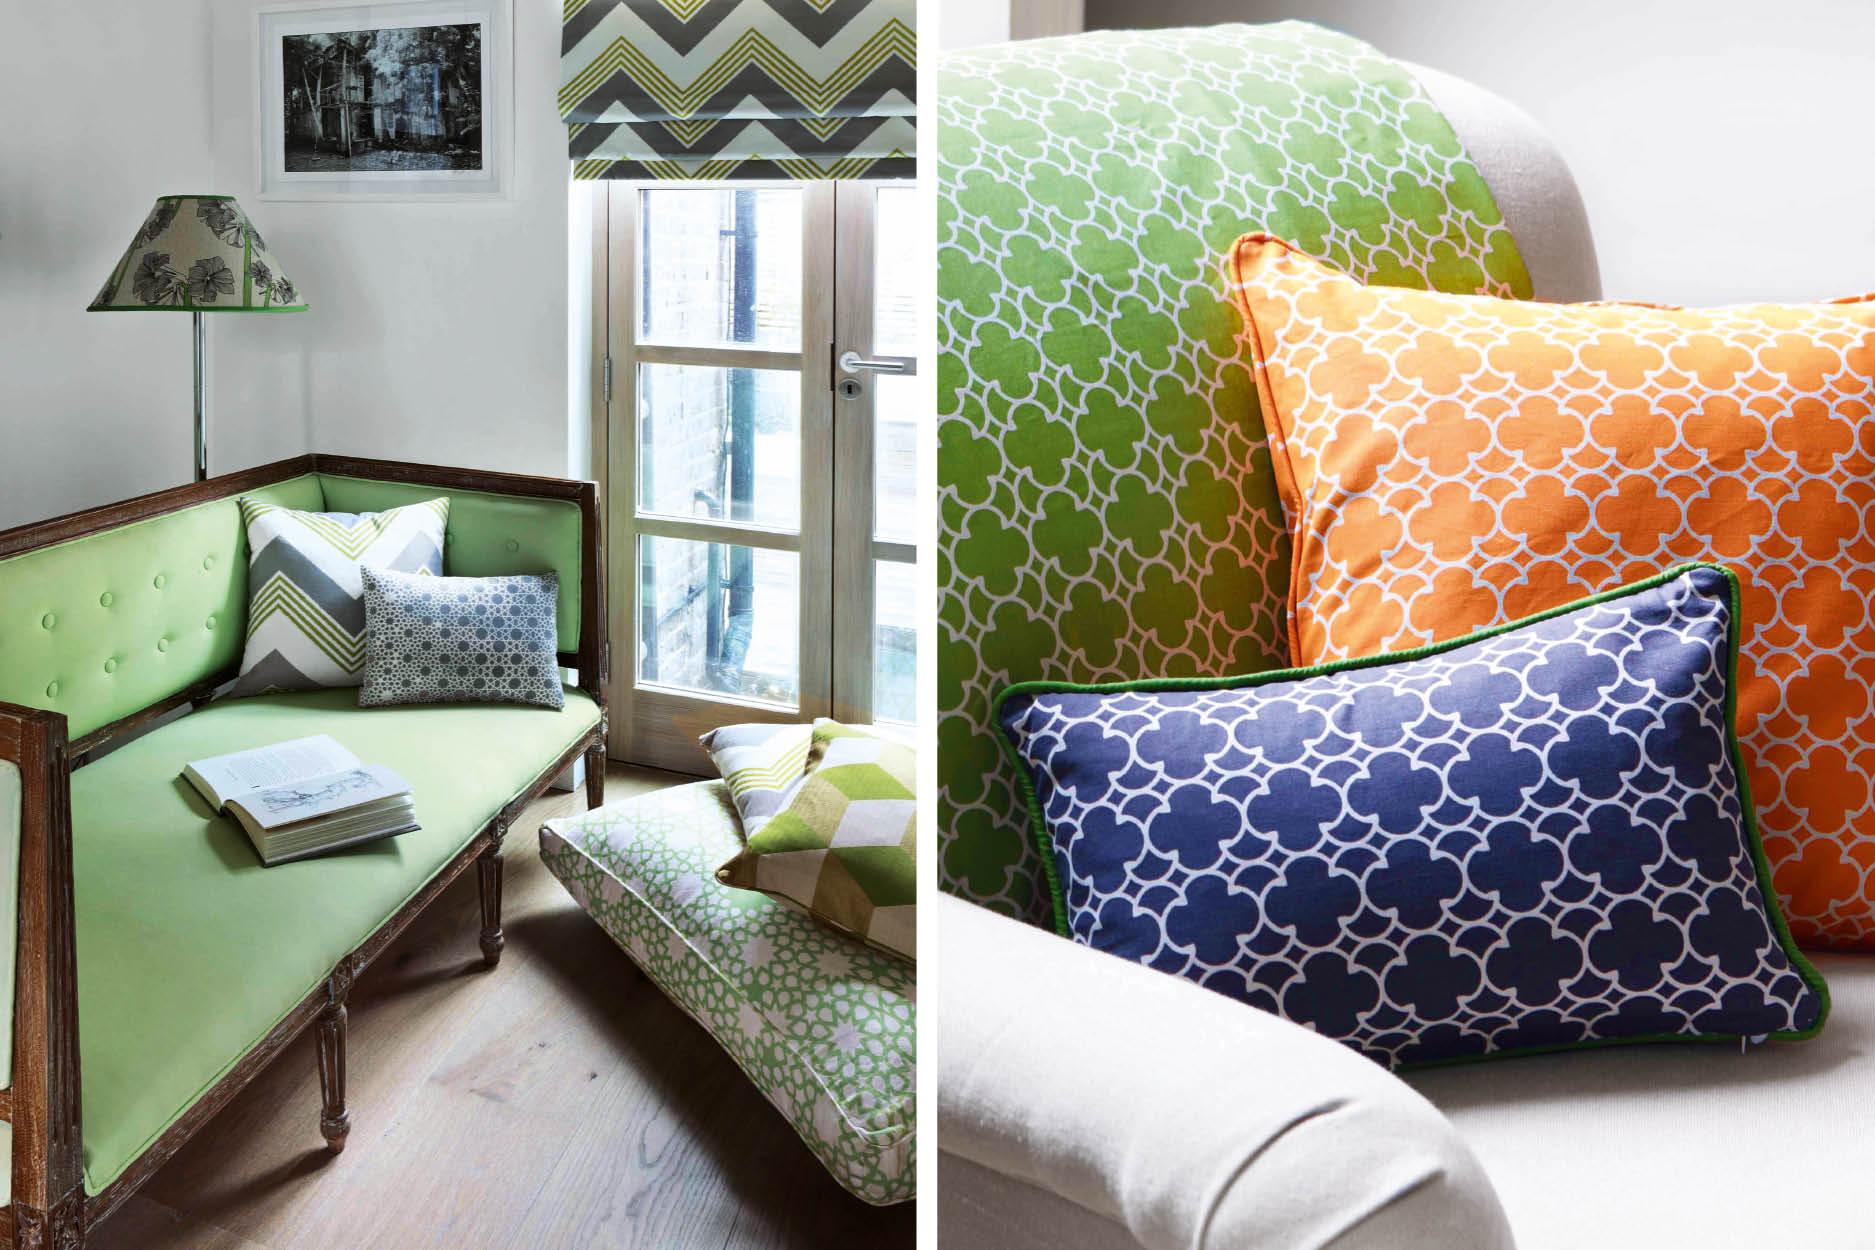 Step Inside a Textile Designer's Colourful Home